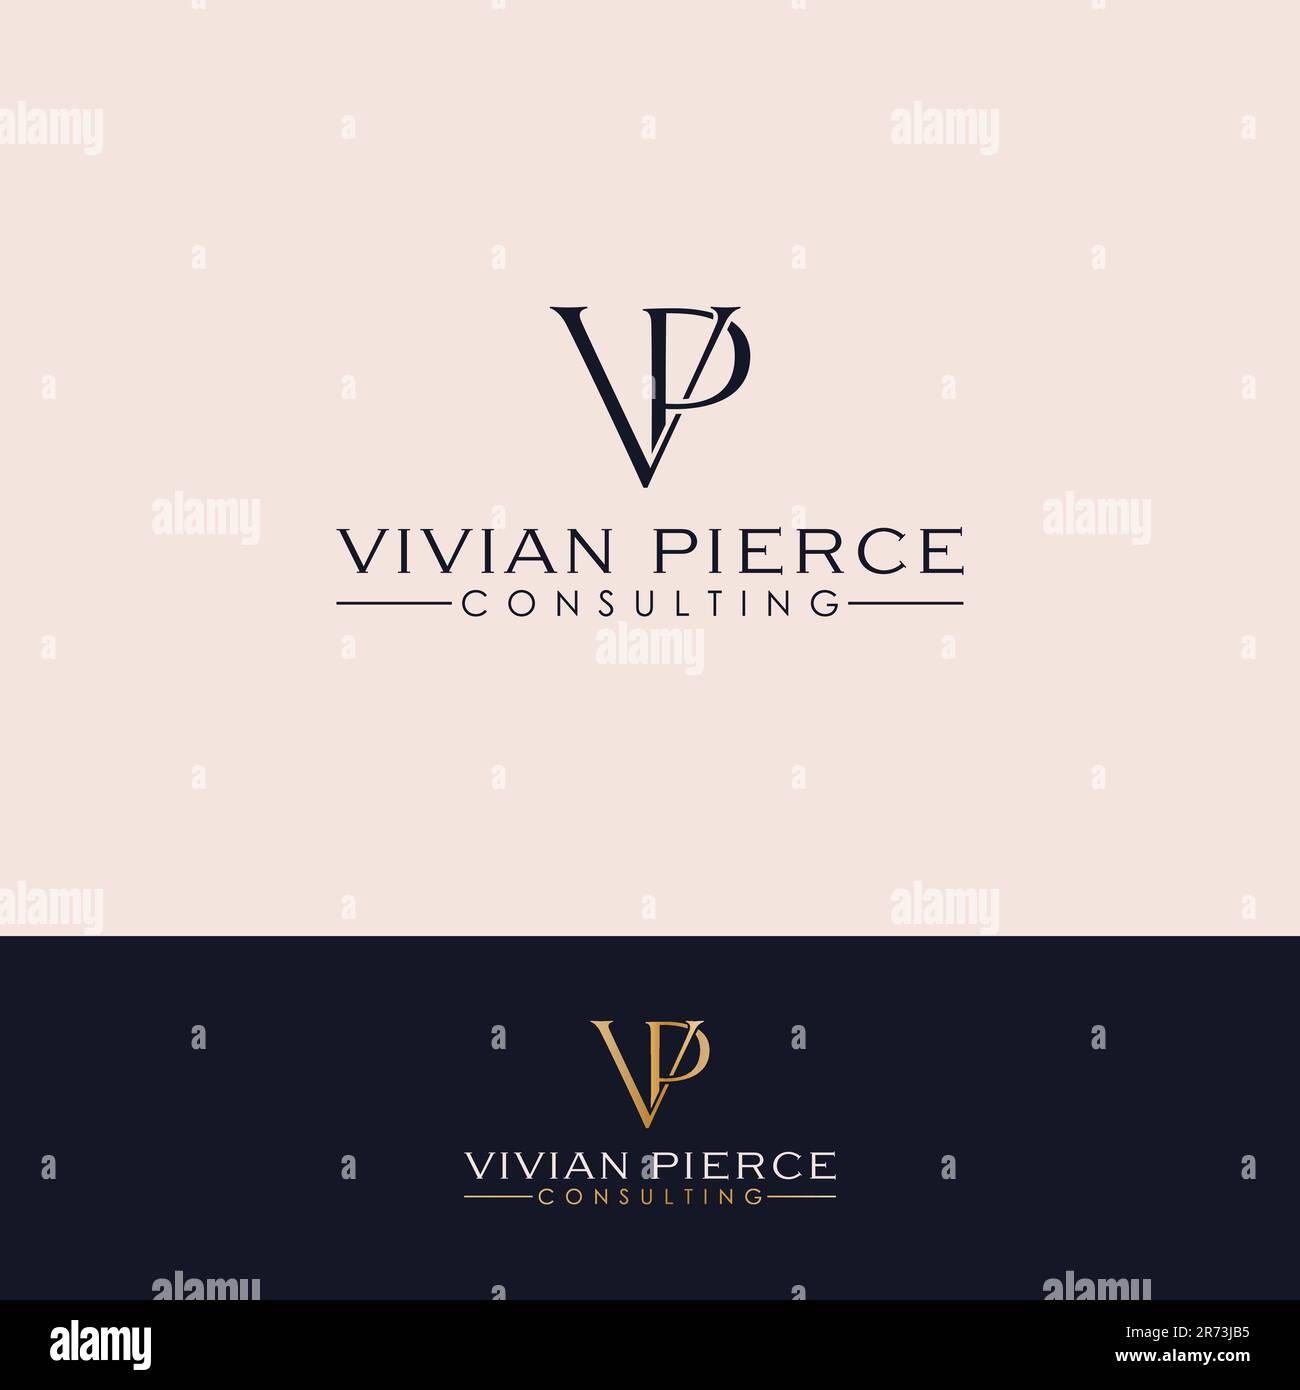 Vivian Pierce consulting vector logo design. Letters V and P logotype. VP initials logo template. Stock Vector